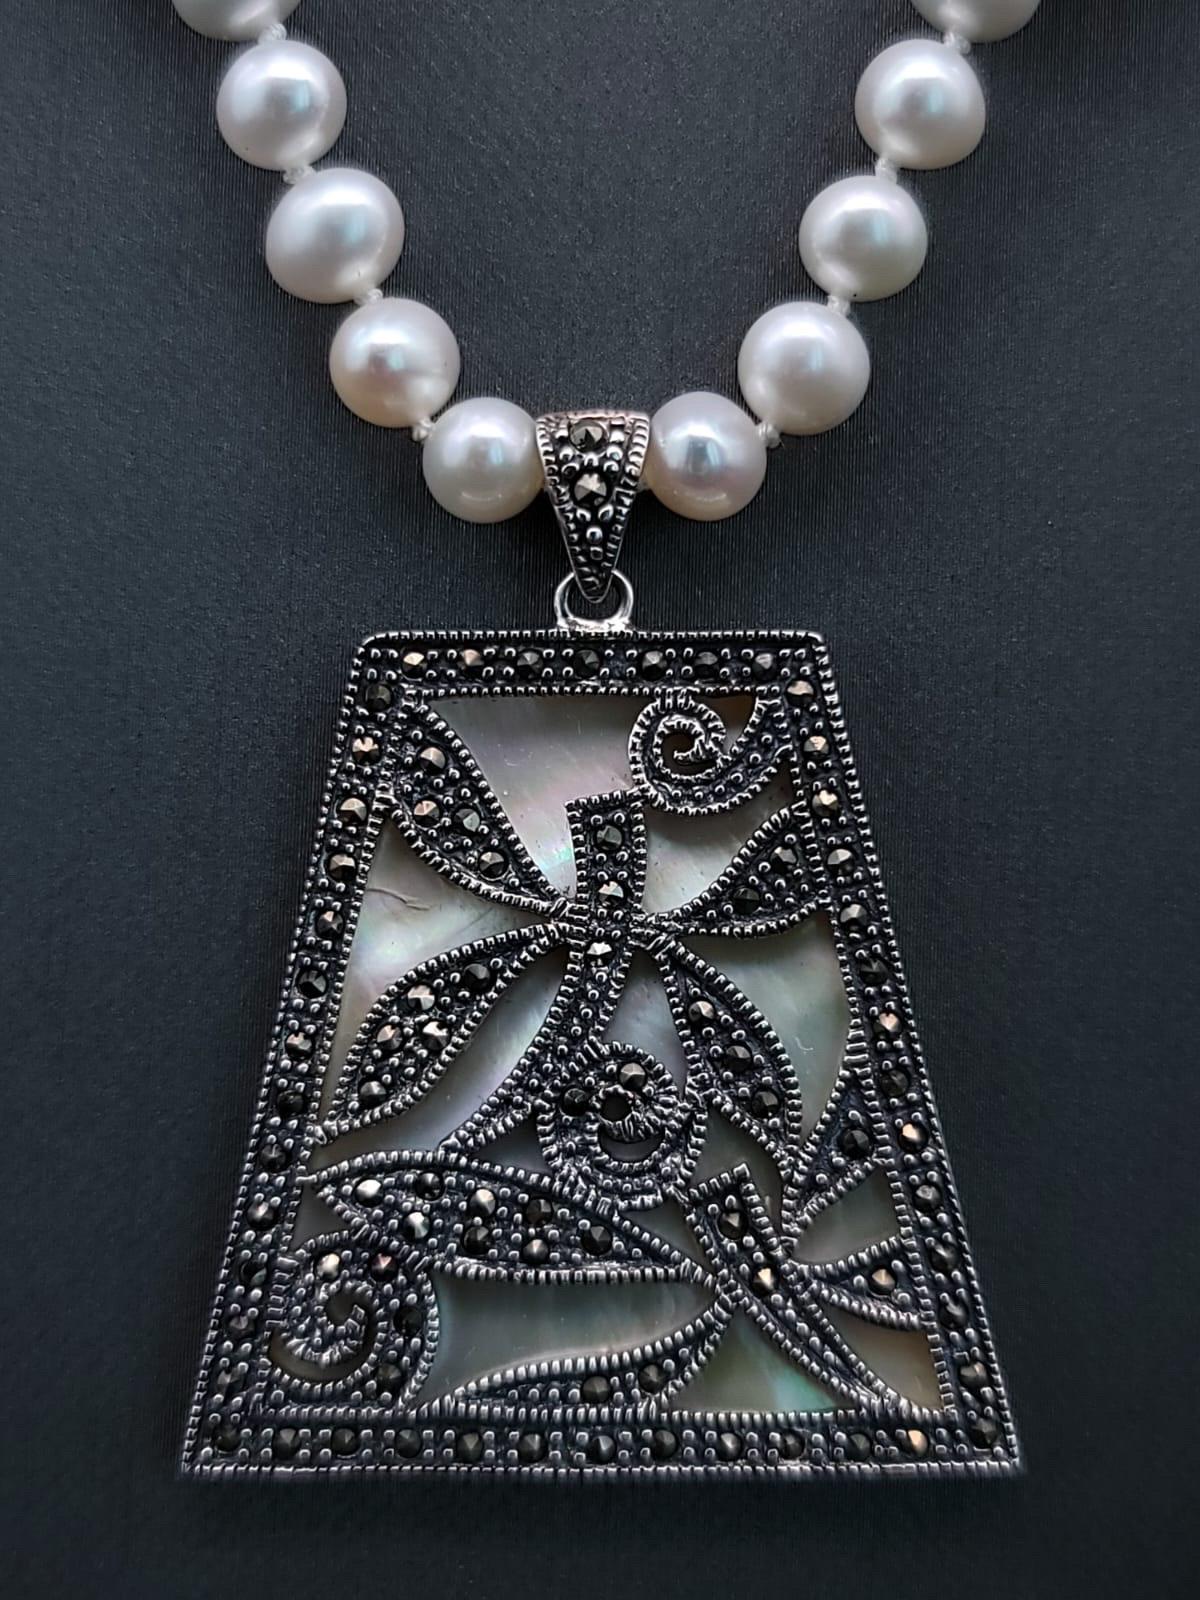 A.Jeschel Elegant Long Baroque Necklace with pendant. For Sale 8